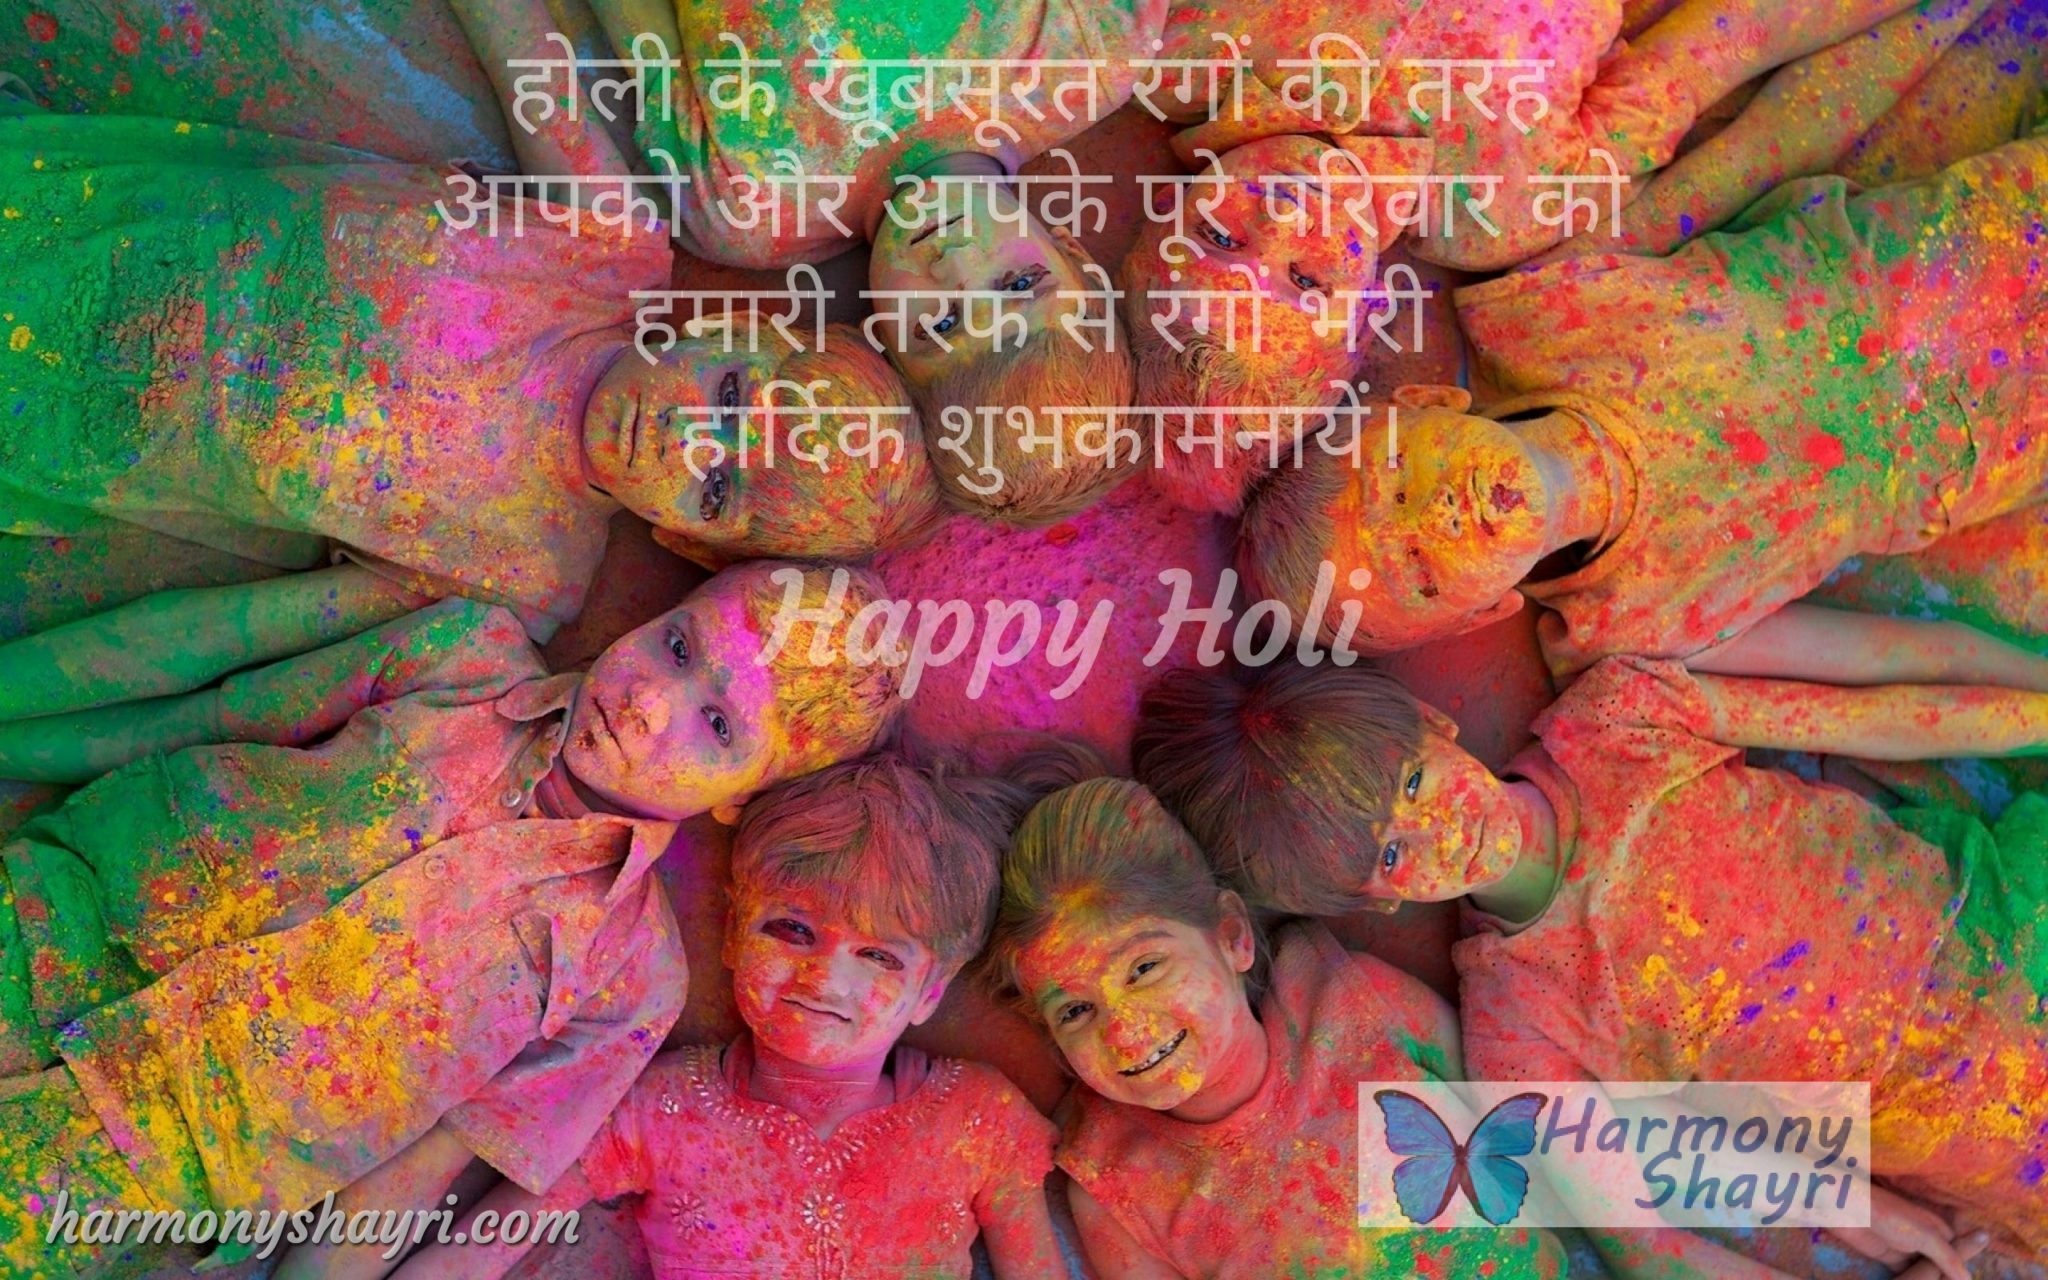 Rang bhari shubhkamnayen- Happy Holi